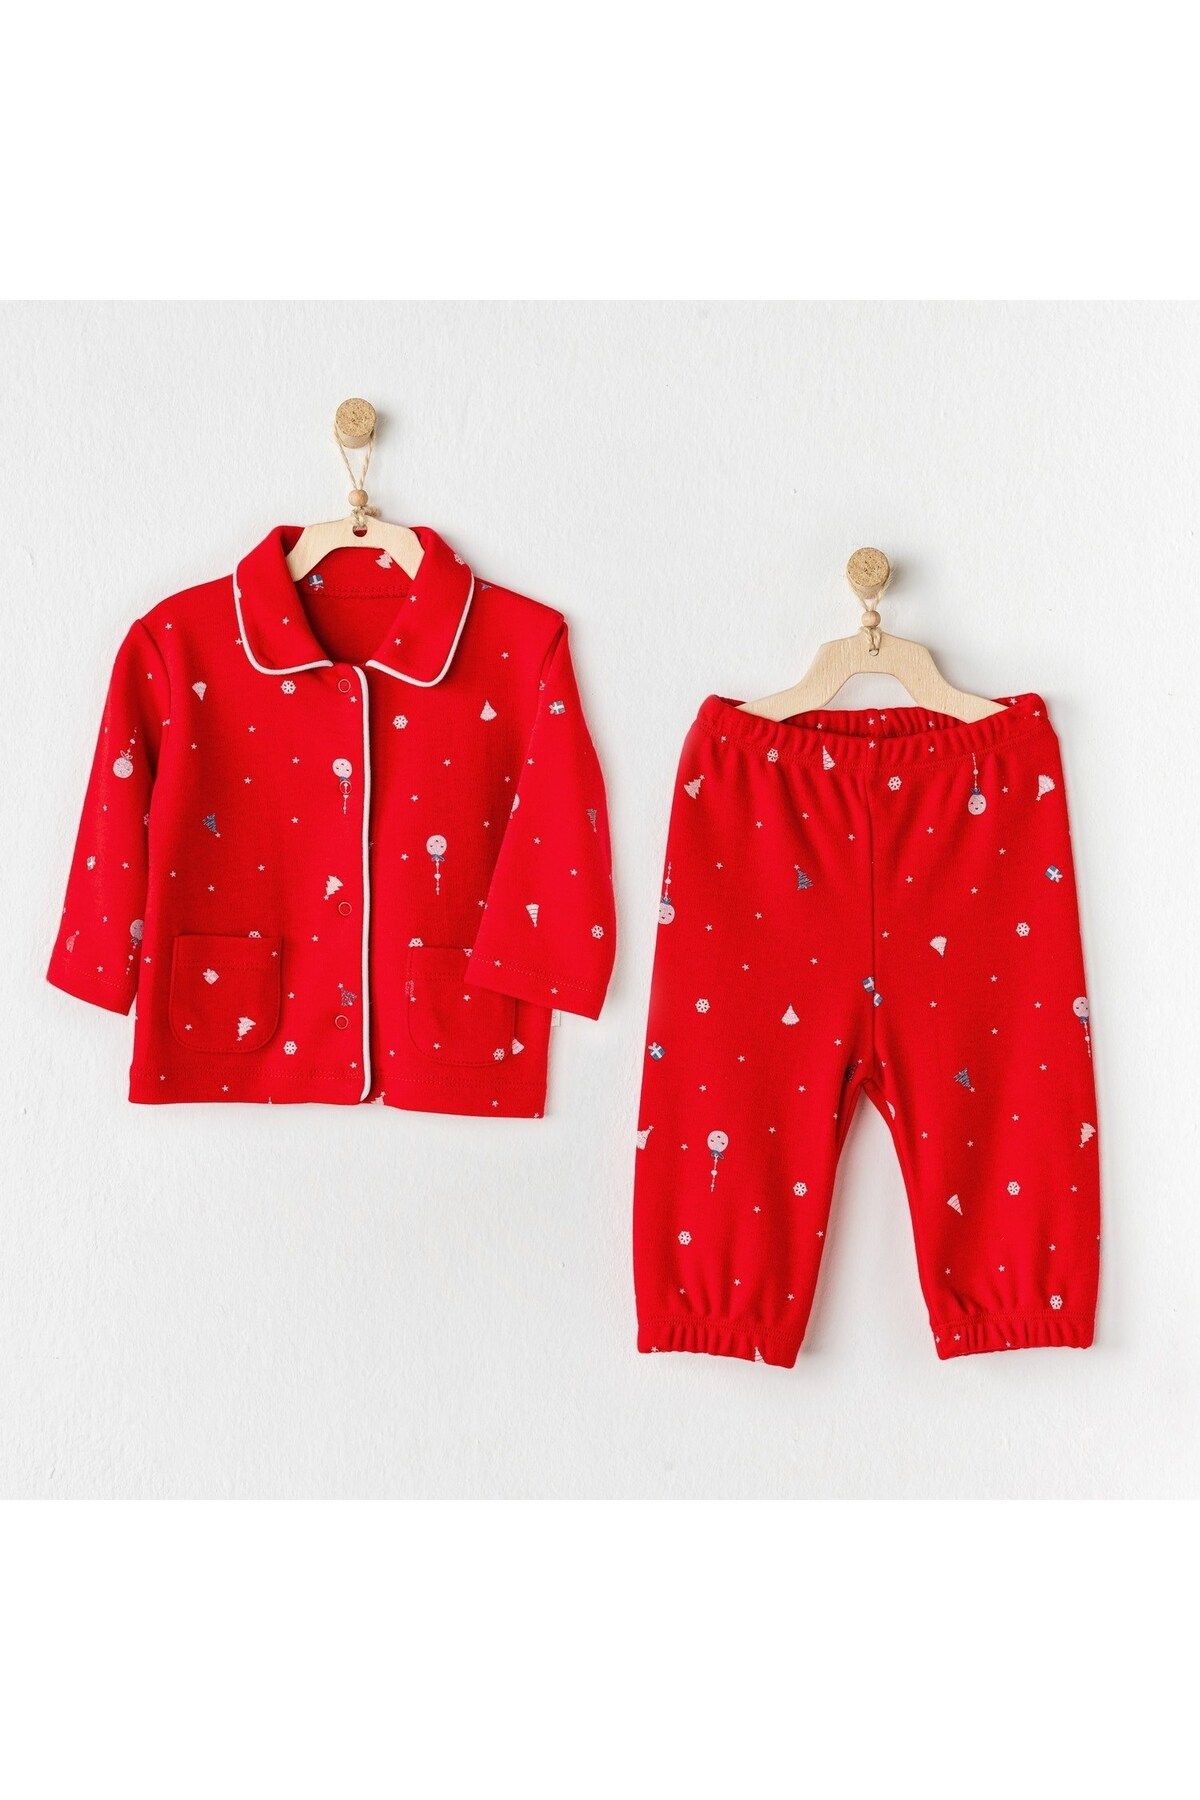 Andy Wawa Ac24432 New Year Bebek Pijama Takımı Red